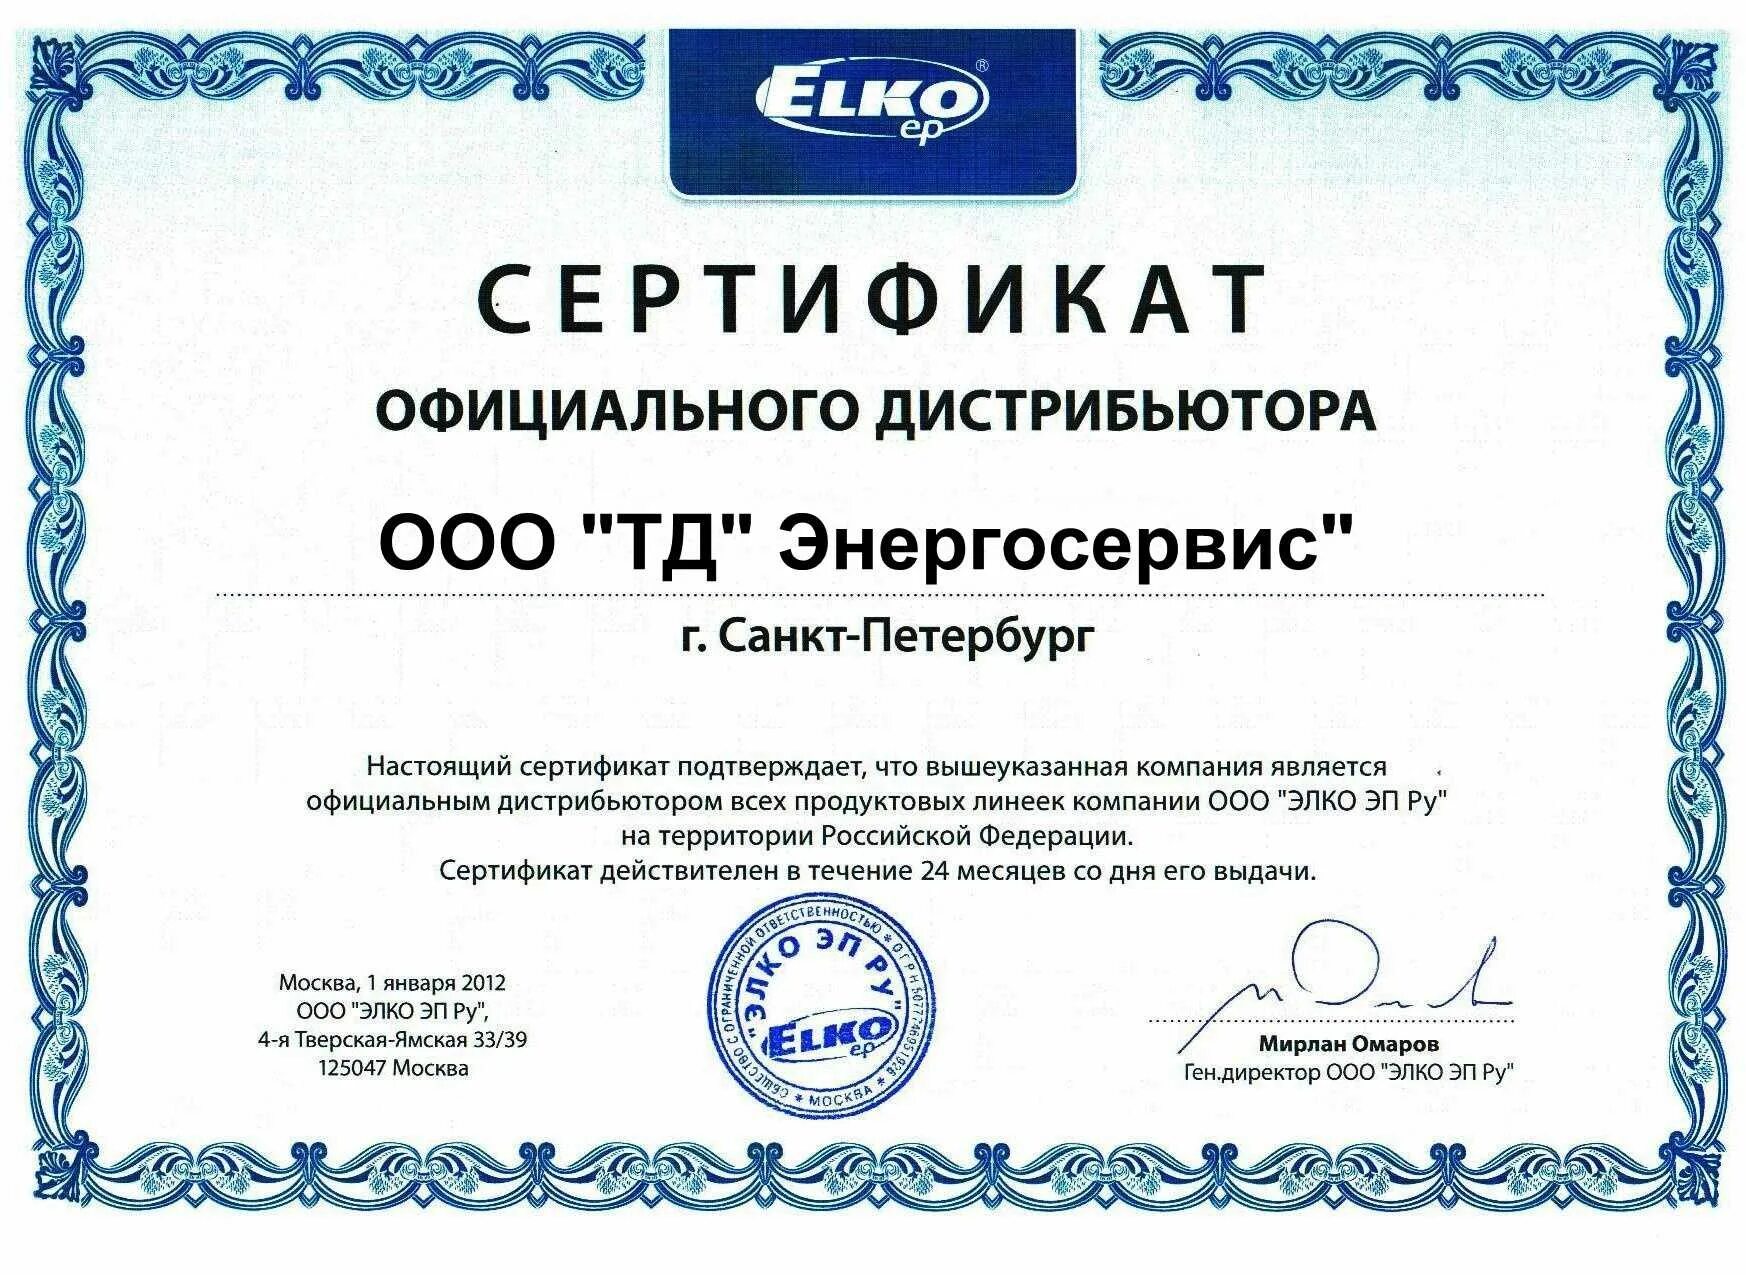 Сертификат дистрибьютора. Сертификат официального дистрибьютора. Сертификат дистрибьютера.